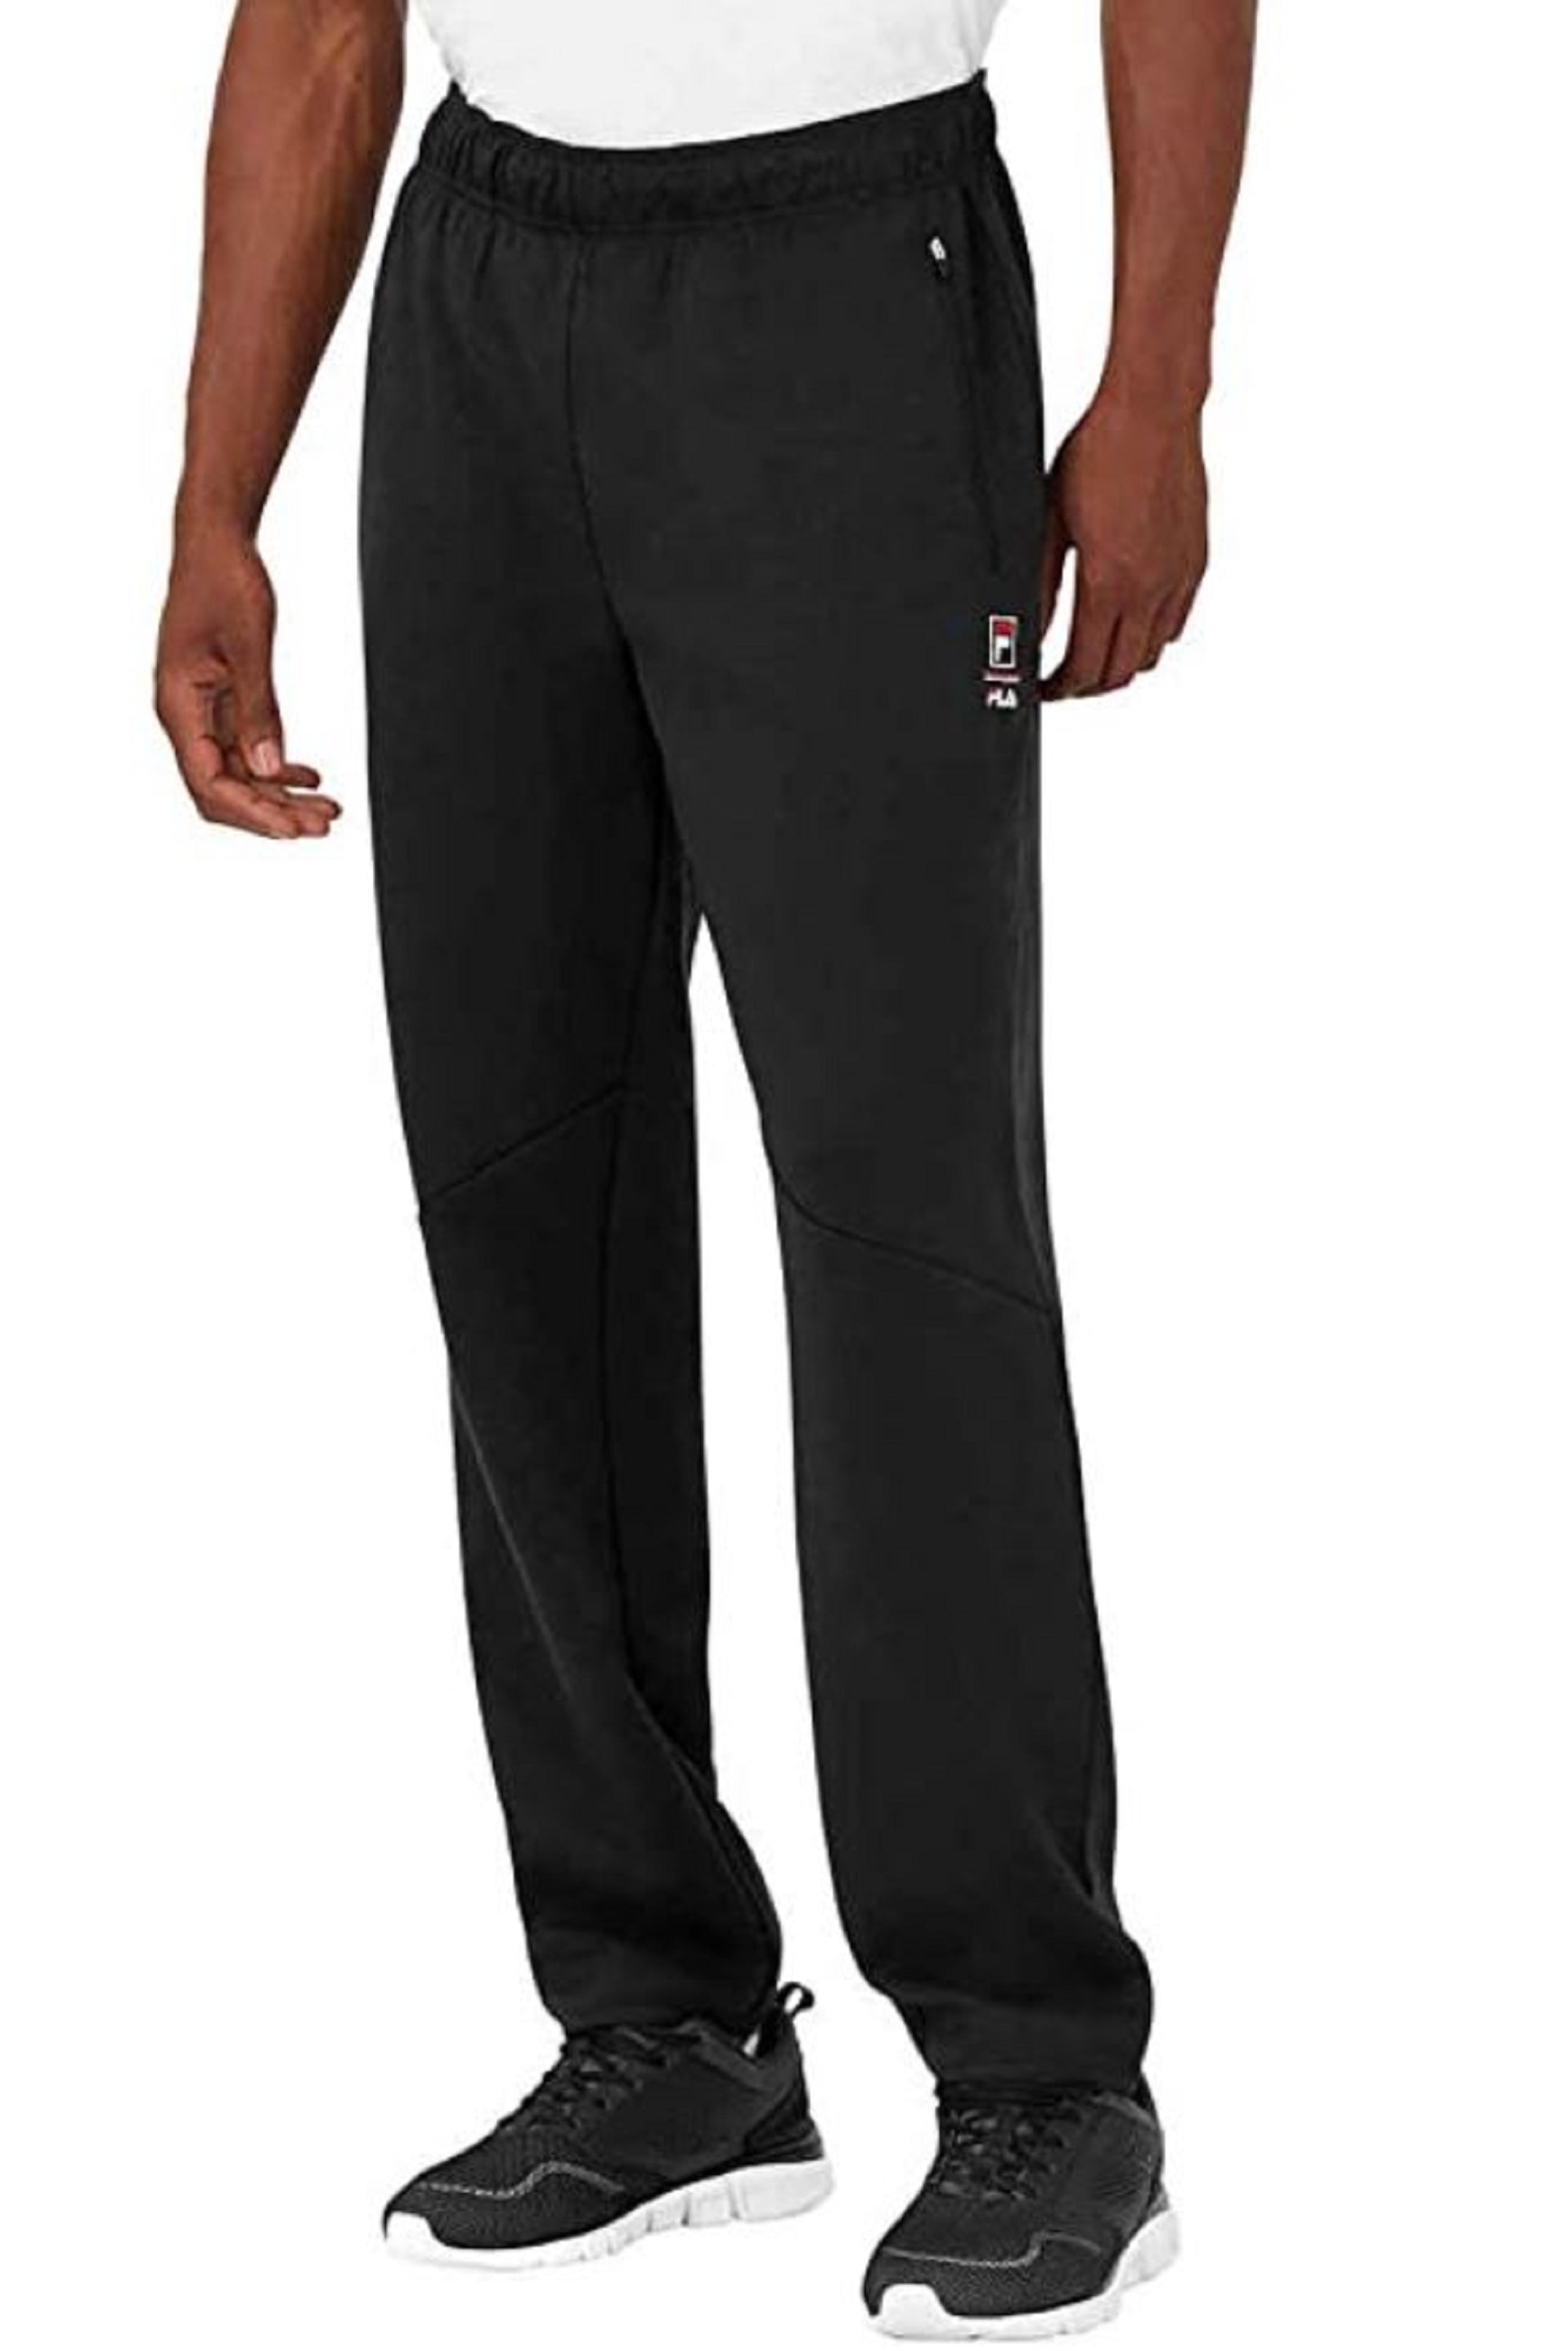 Fila Sport Mens Zip Ankle Dark Gray Knit Fabric Track Athletic Pants